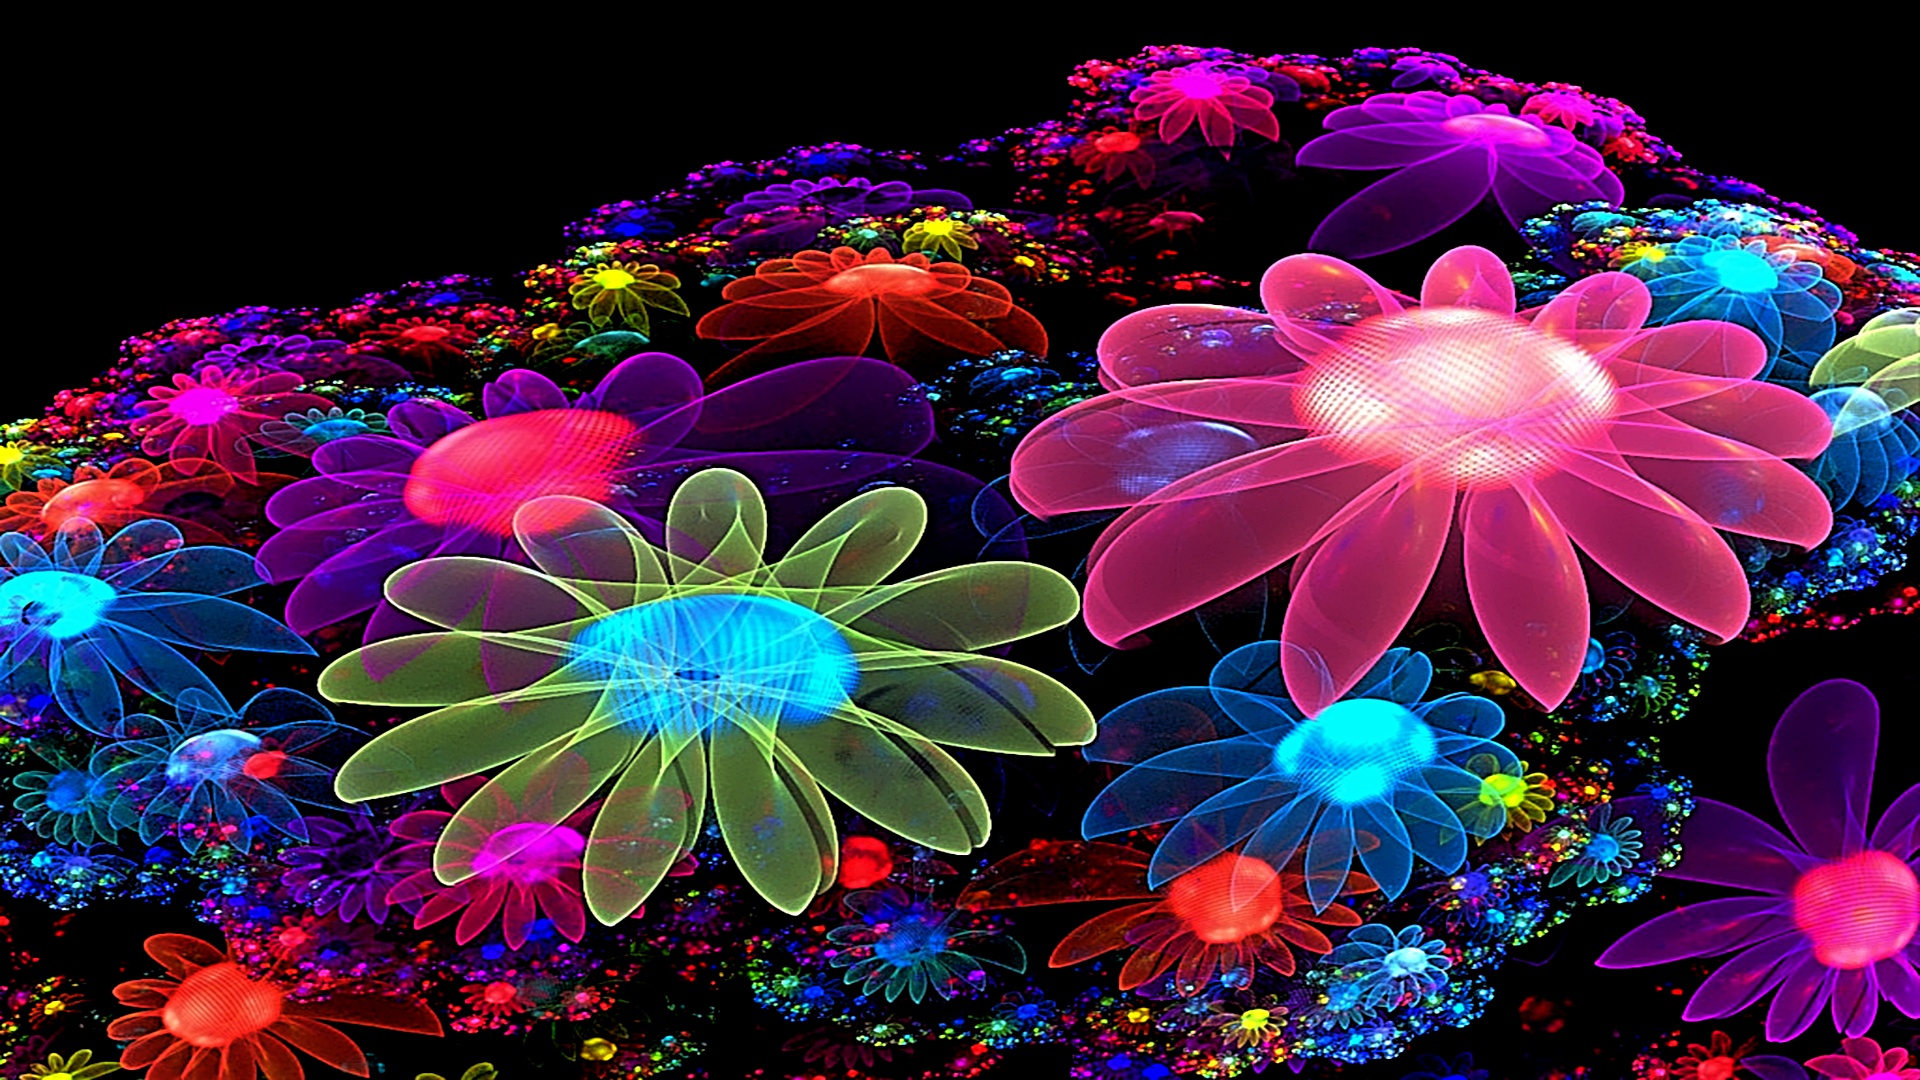  Colorful Flowers Desktop Wallpapers Free Images   Fullsize Wallpaper